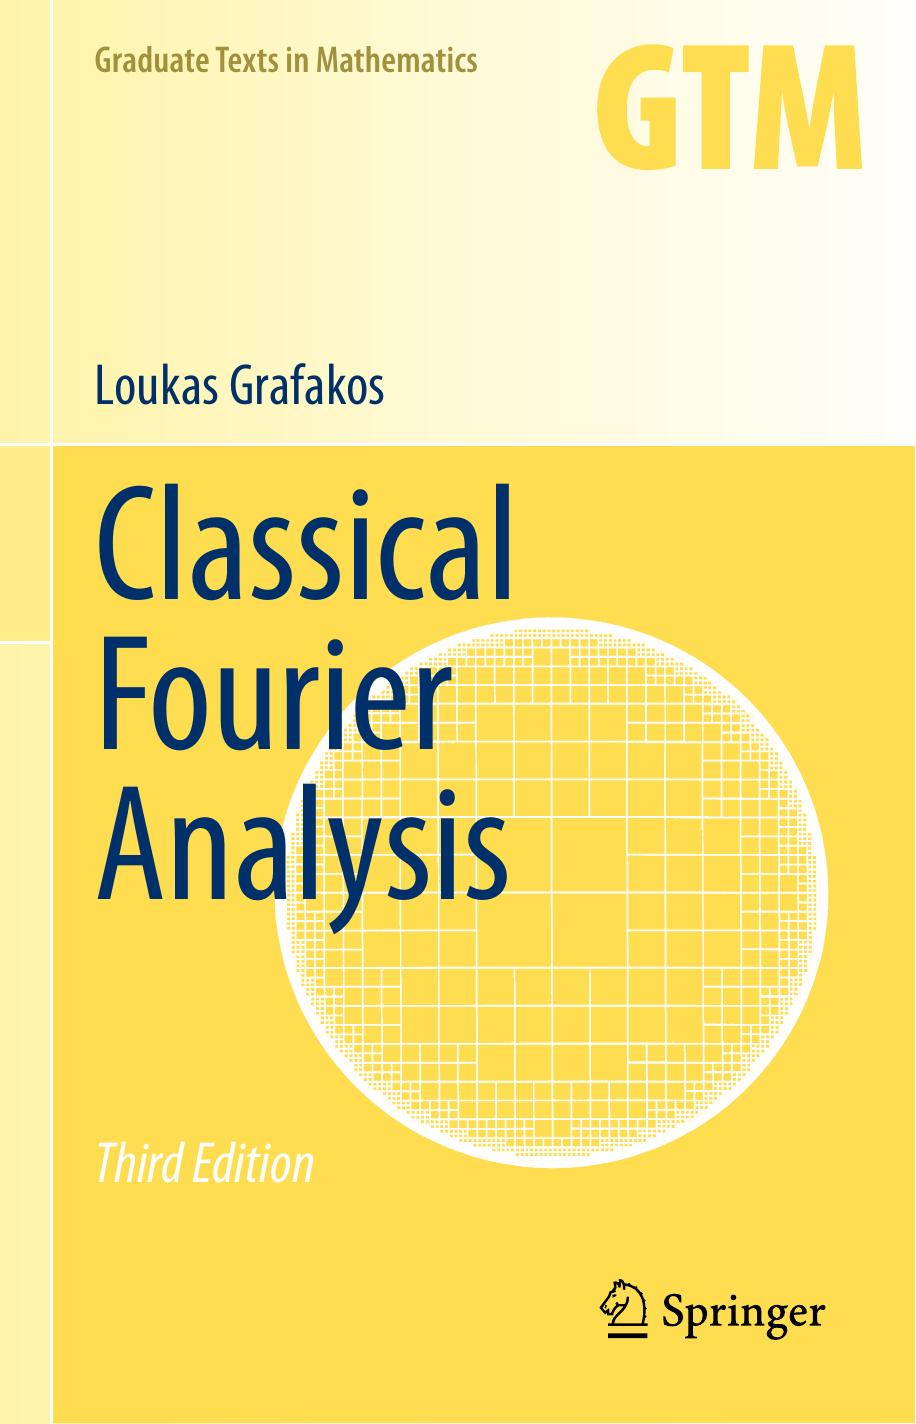 Classical Fourier Analysis by Loukas Grafakos